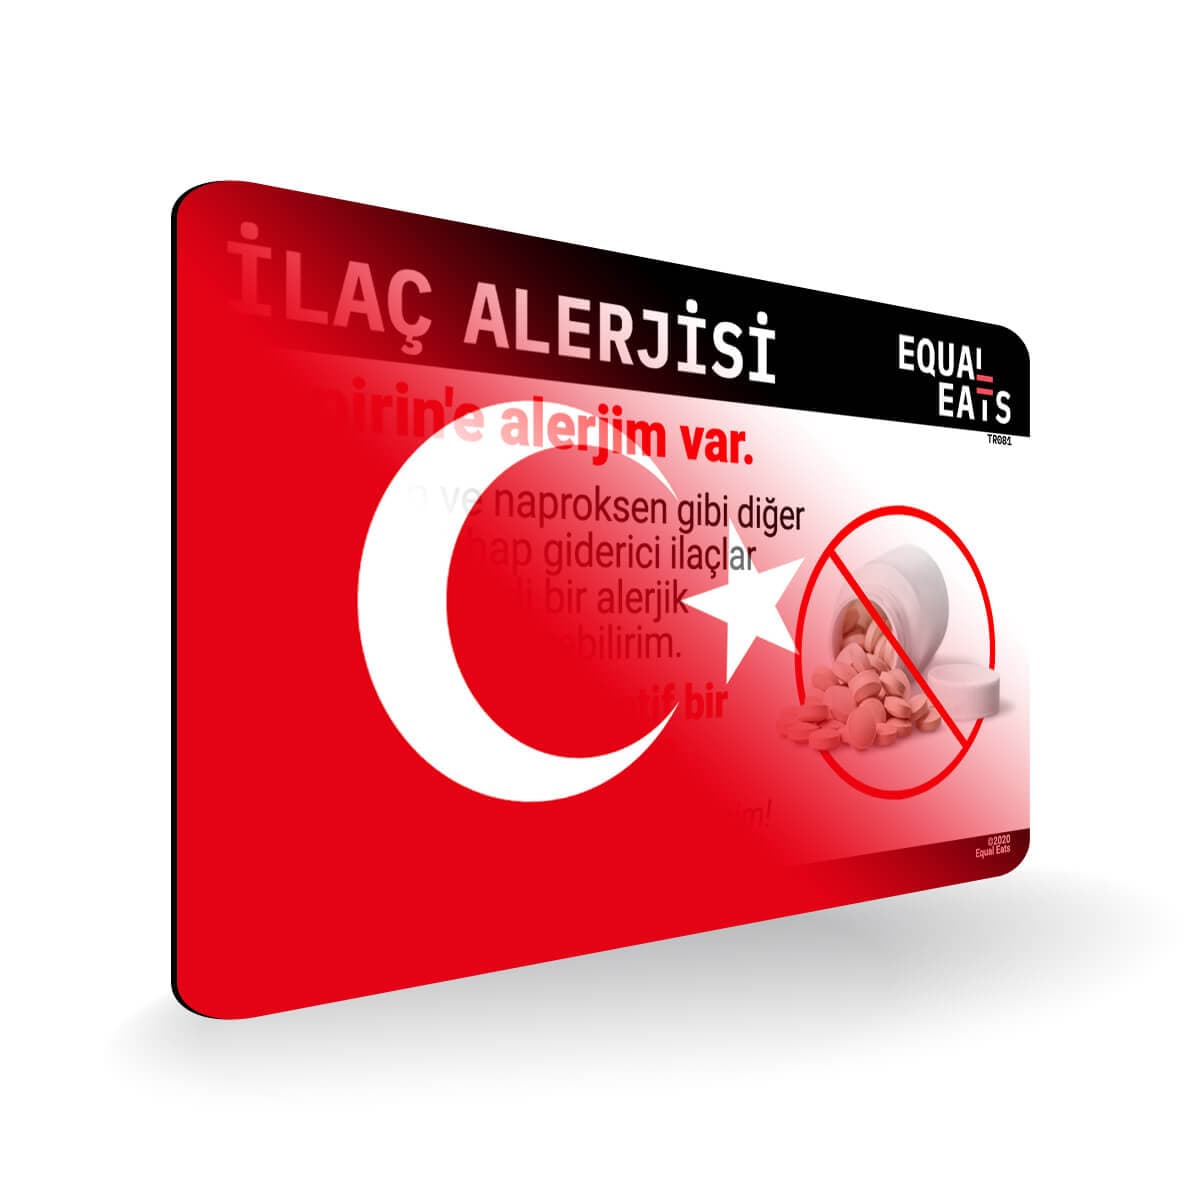 Aspirin Allergy in Turkish. Aspirin medical I.D. Card for Turkey